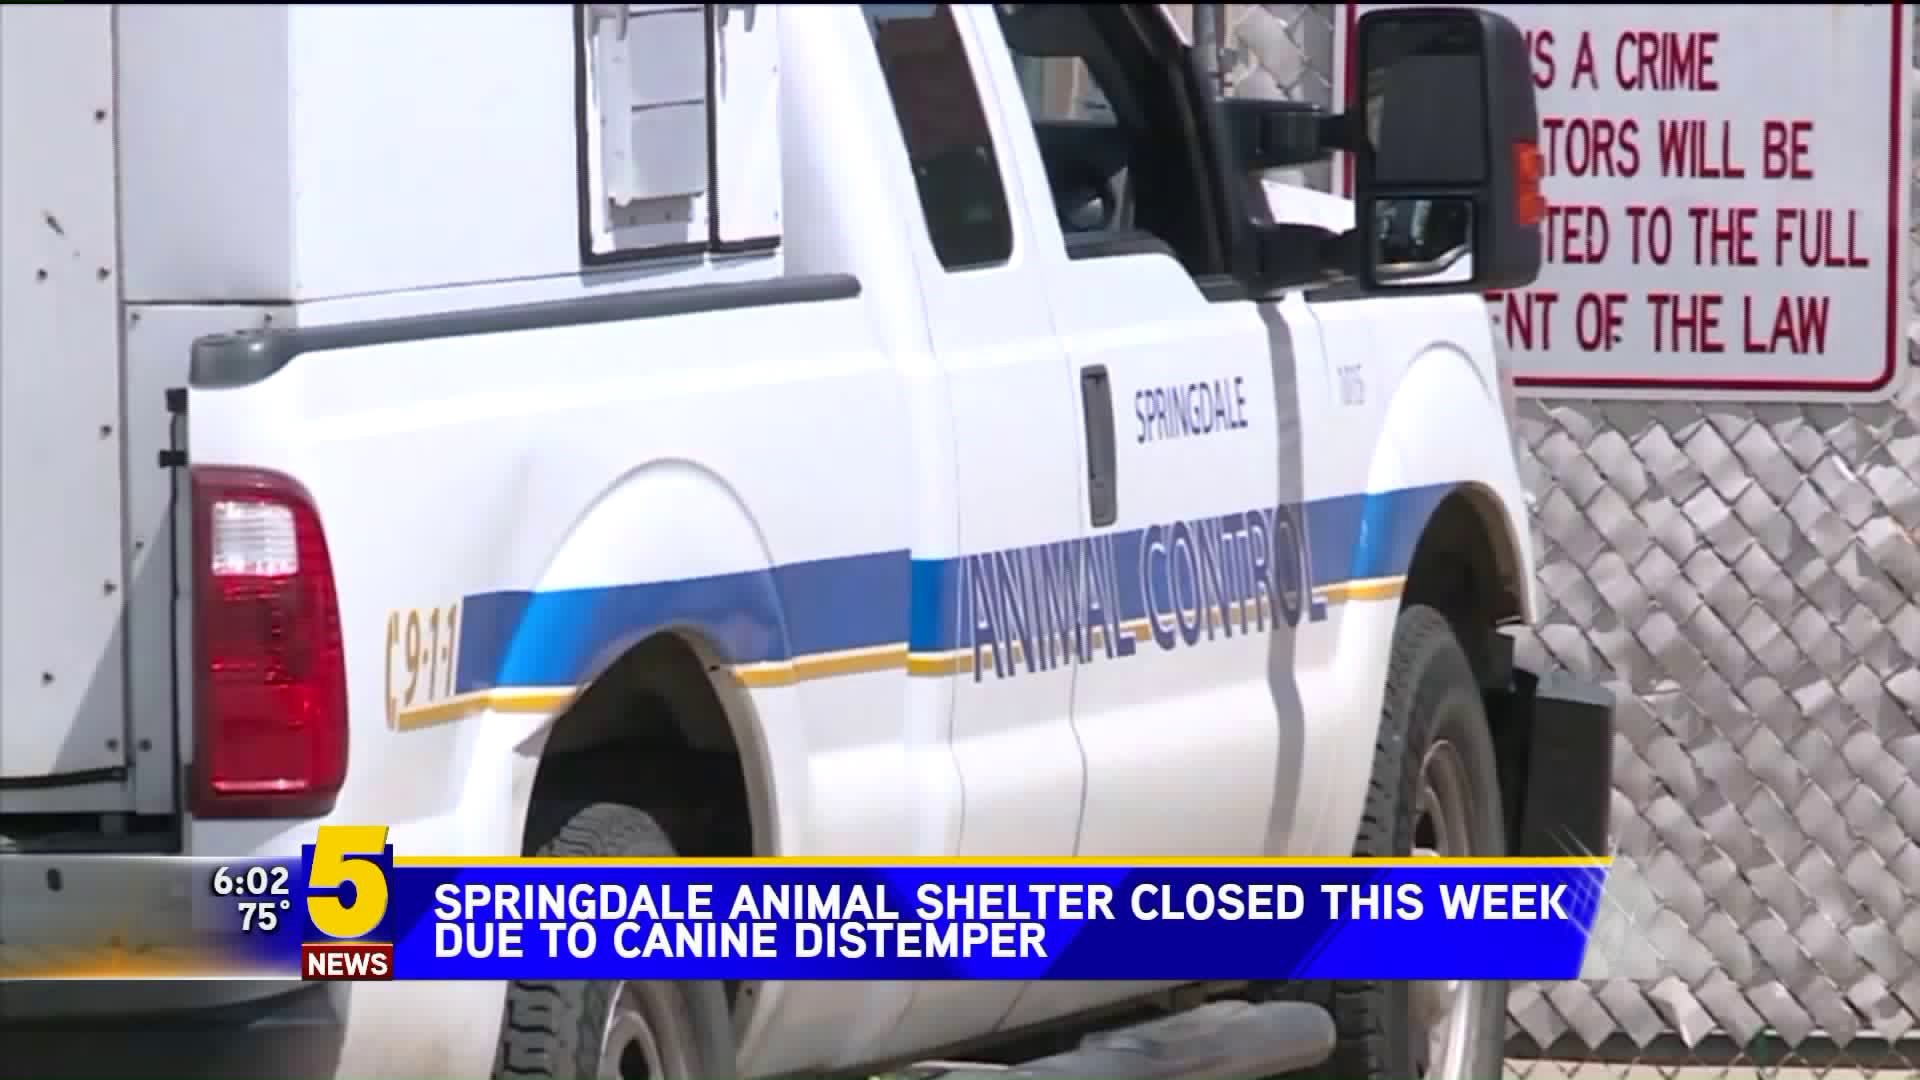 Springdale Animal Shelter Closed for One Week